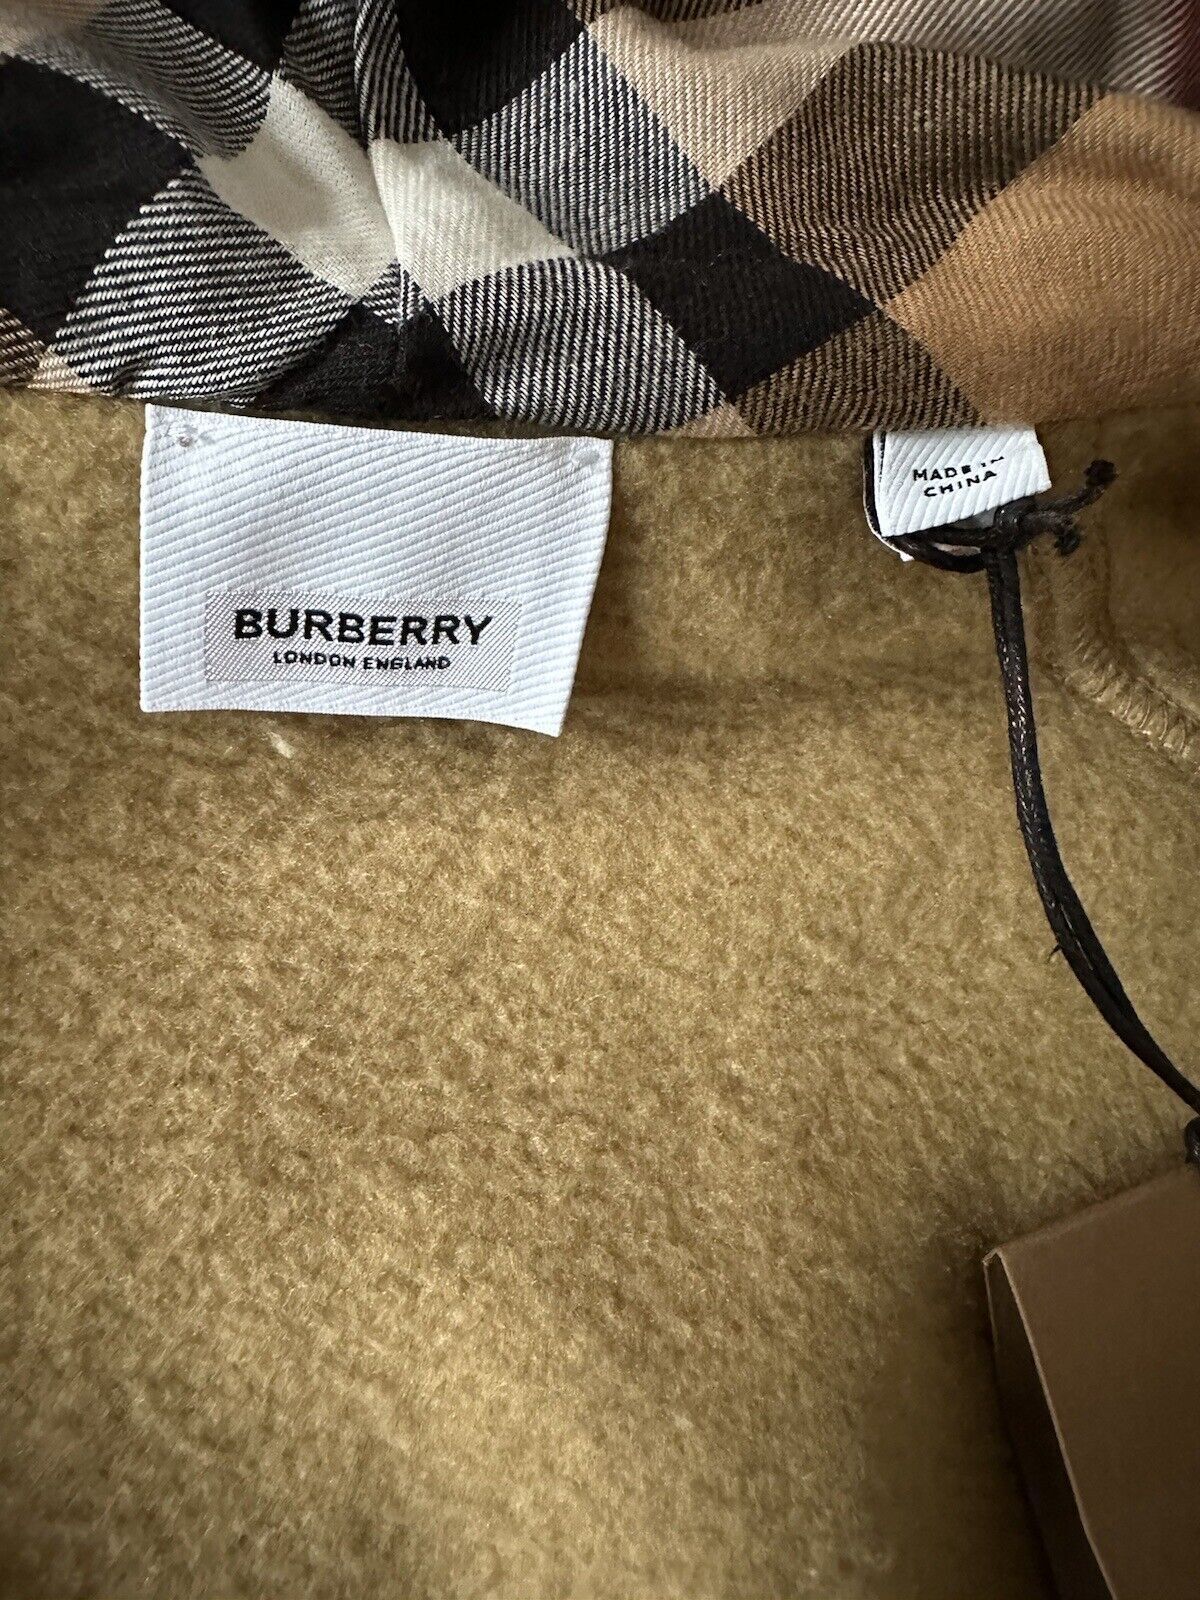 NWT $920 Burberry Women's Check Hoodie Cotton Zip Up Jacket Honey XL 8061555